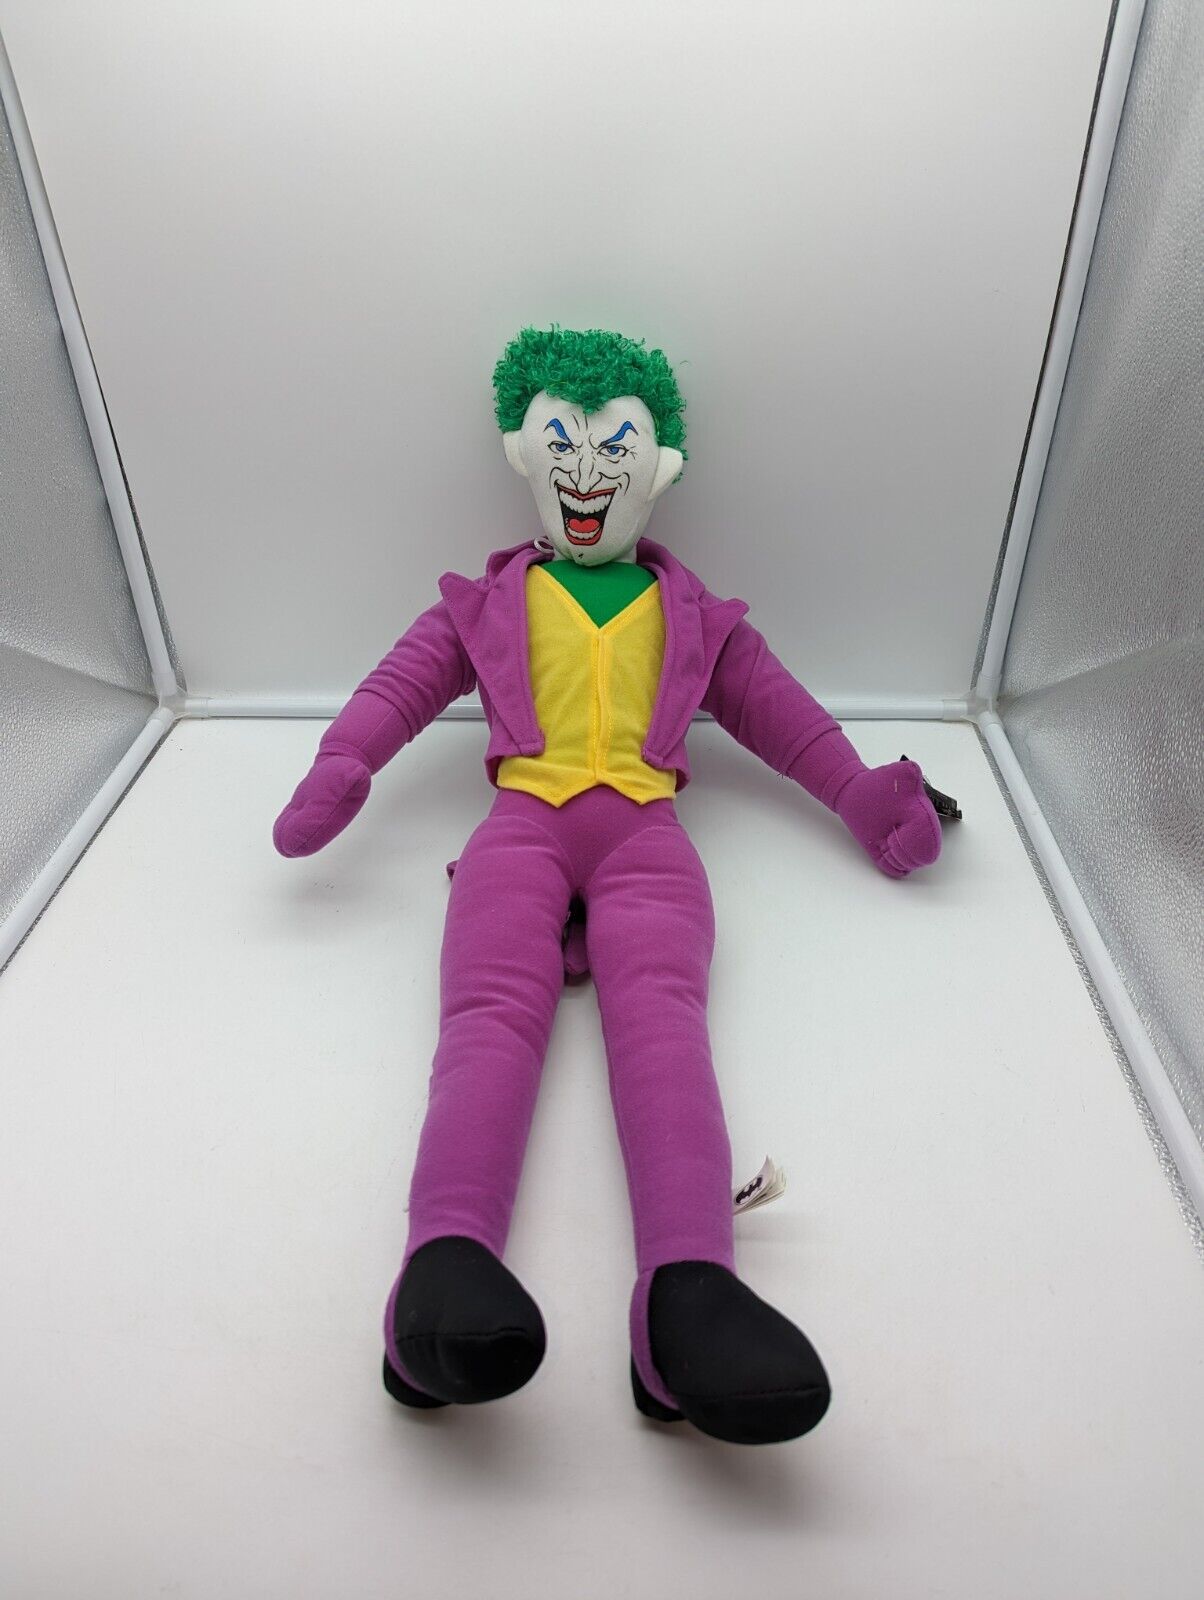 Toy Factory/Warner Bros Batman\'s Plush Large Joker Villain 17.5 Inches